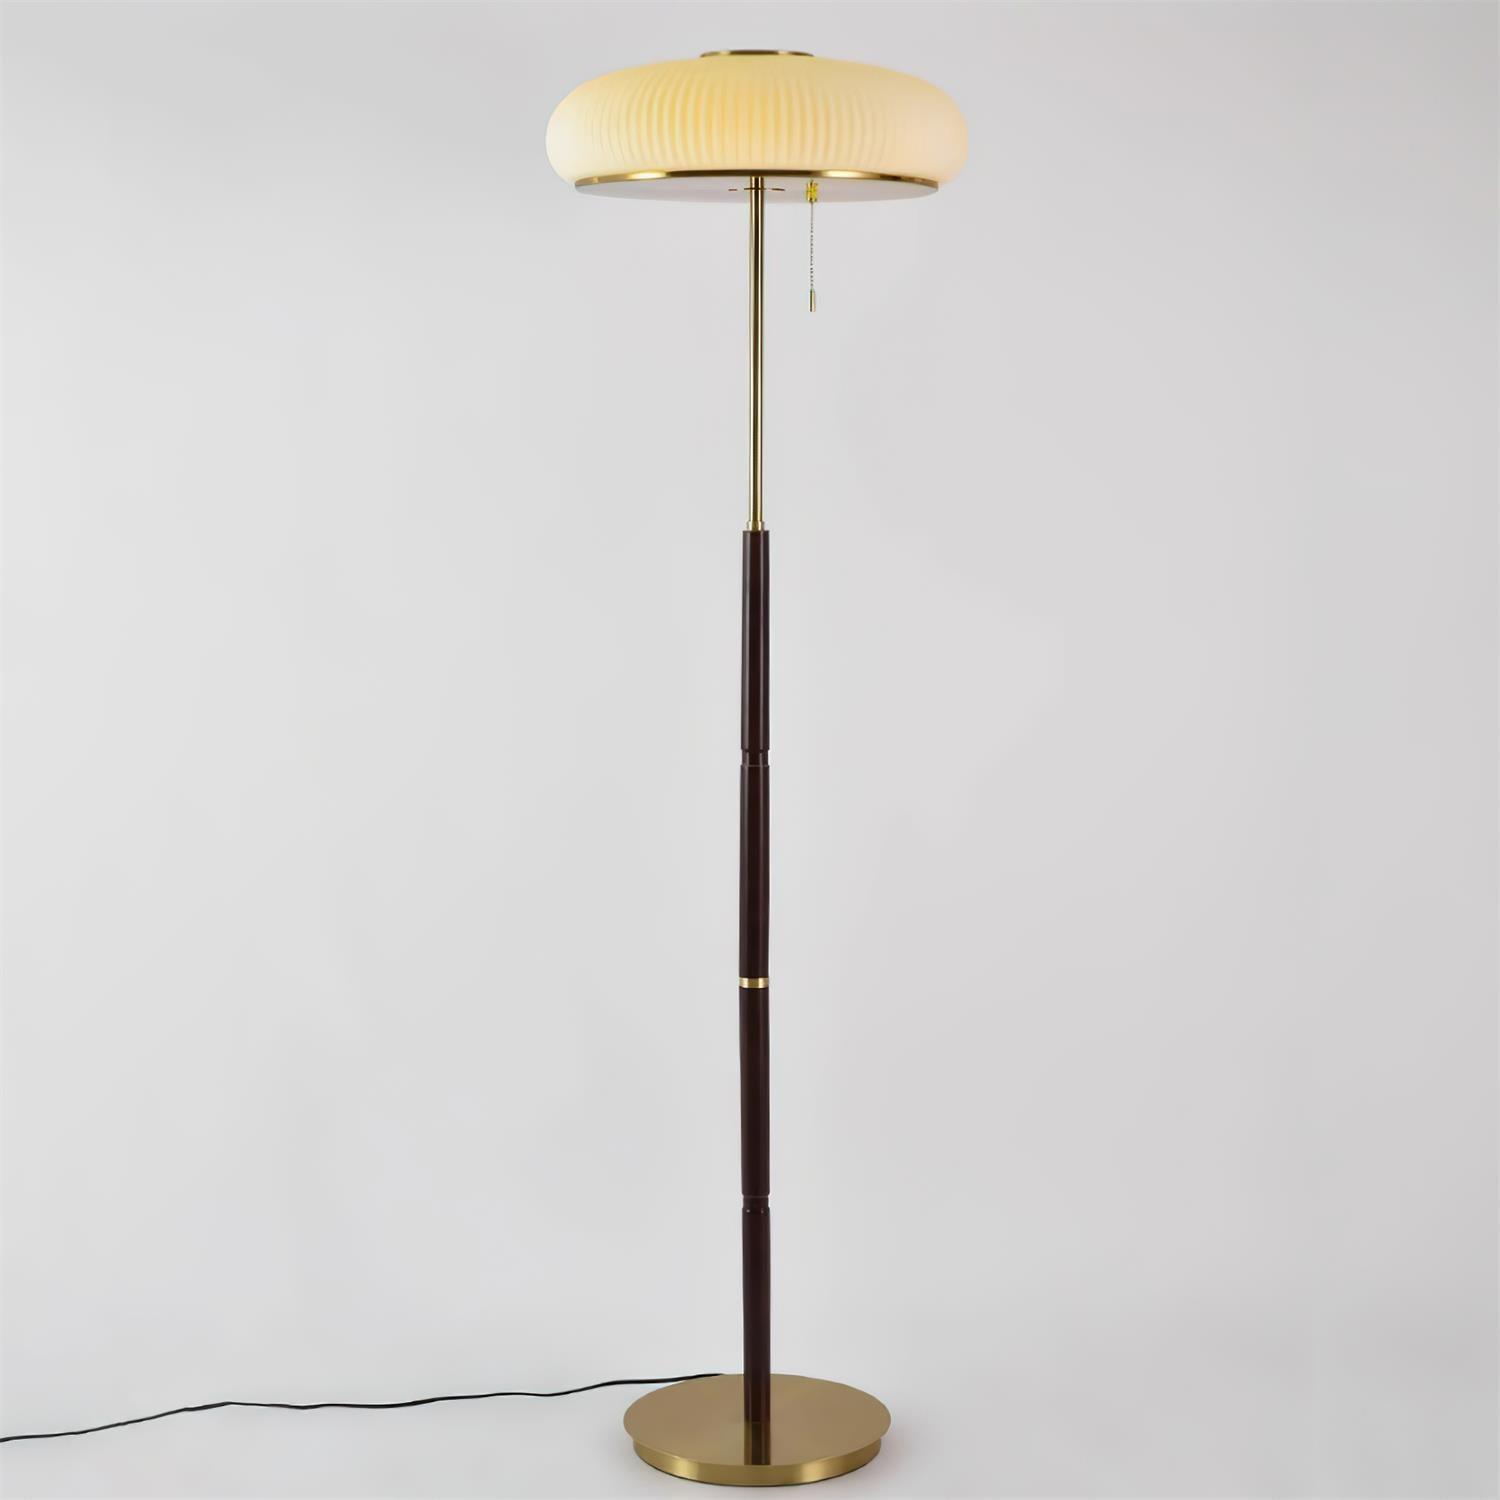 Matsutake Mushroom Floor Lamp - Docos